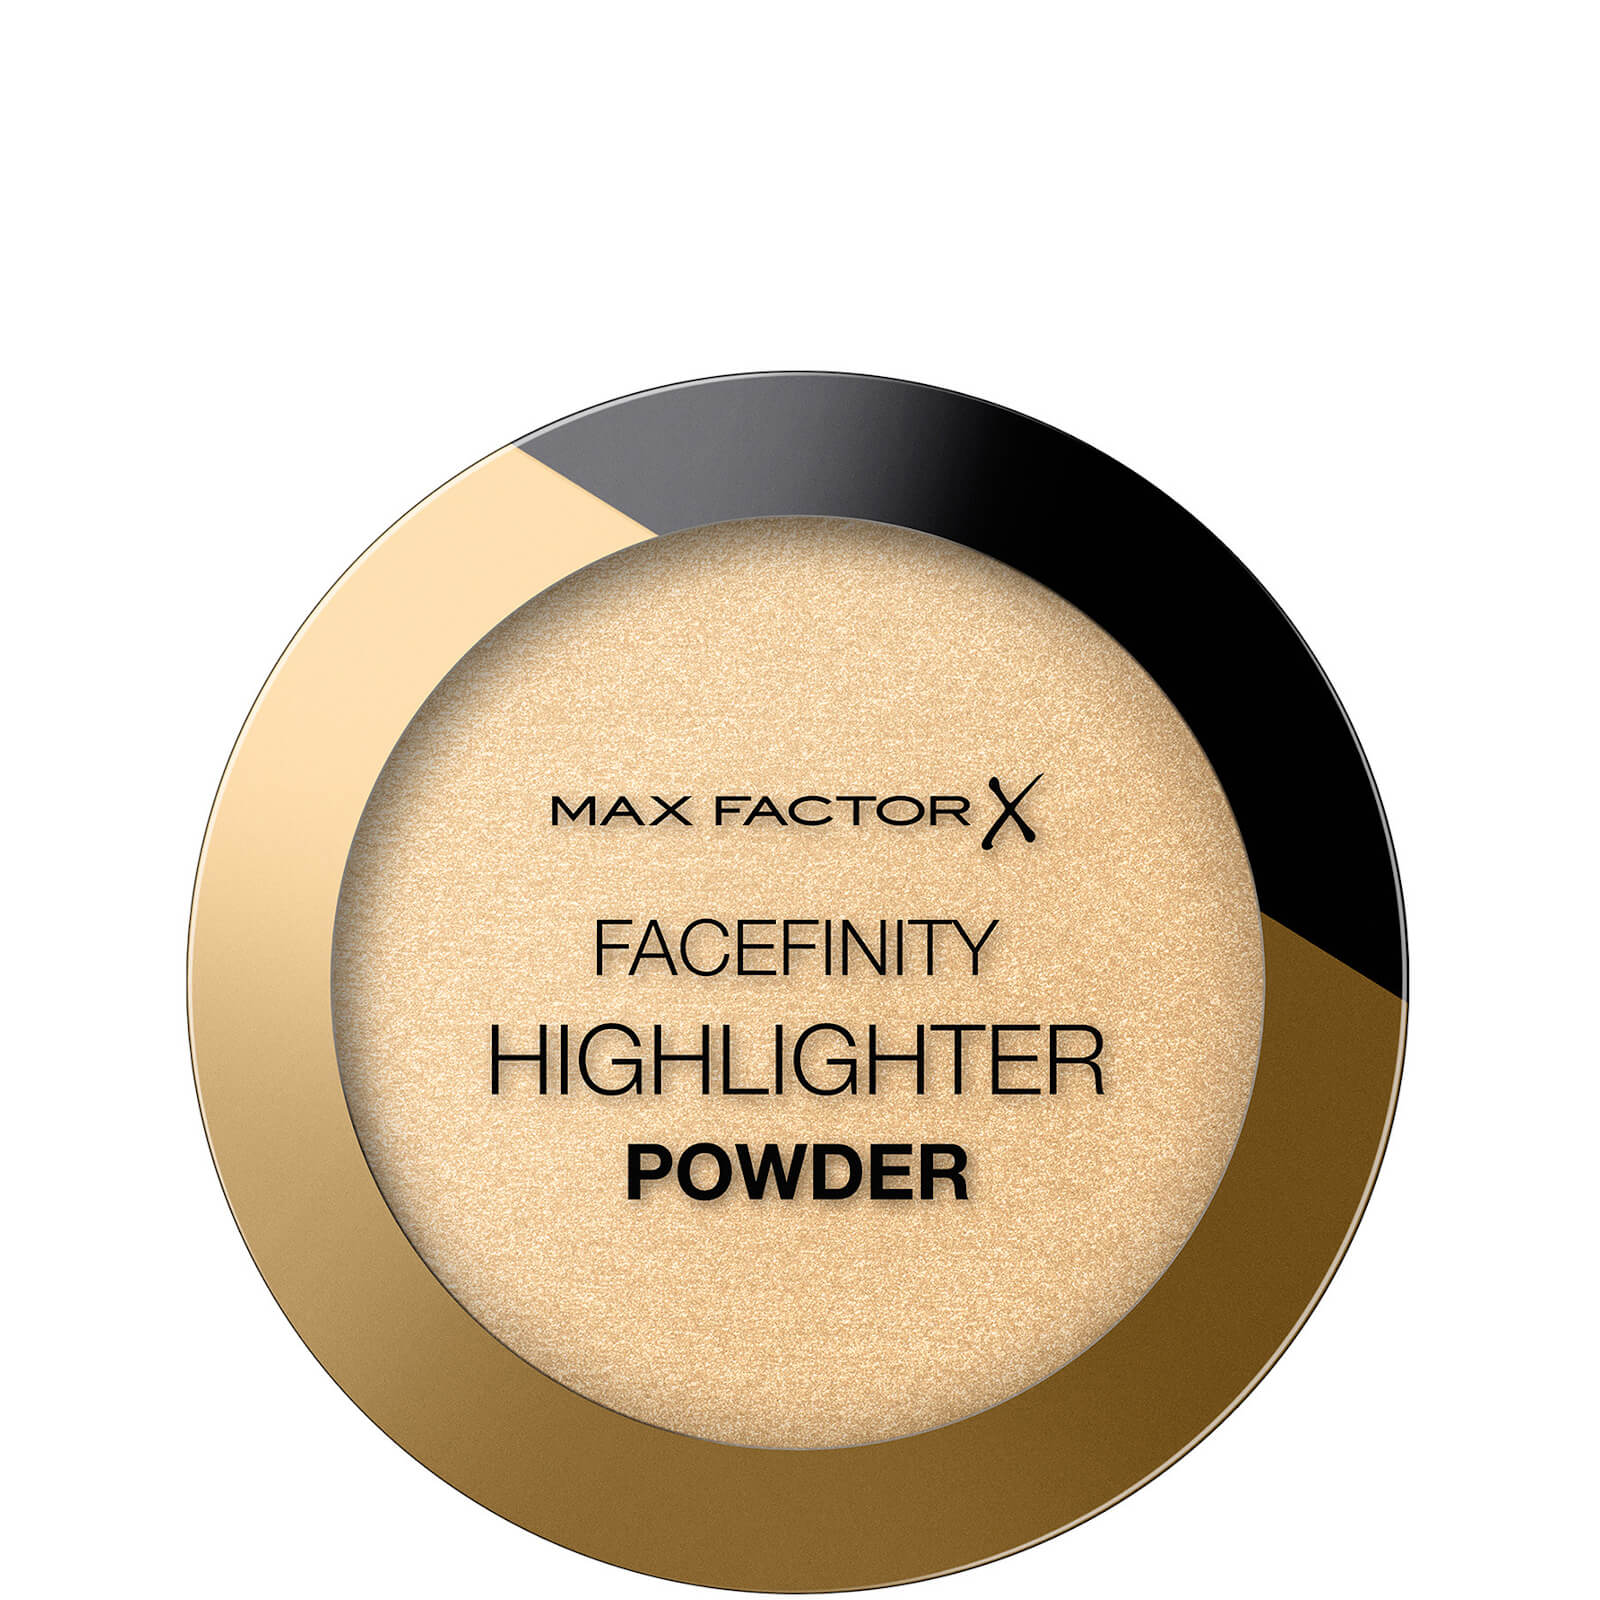 Max Factor Facefinity Powder Highlighter 8g (various Shades) - 002 Golden Hour